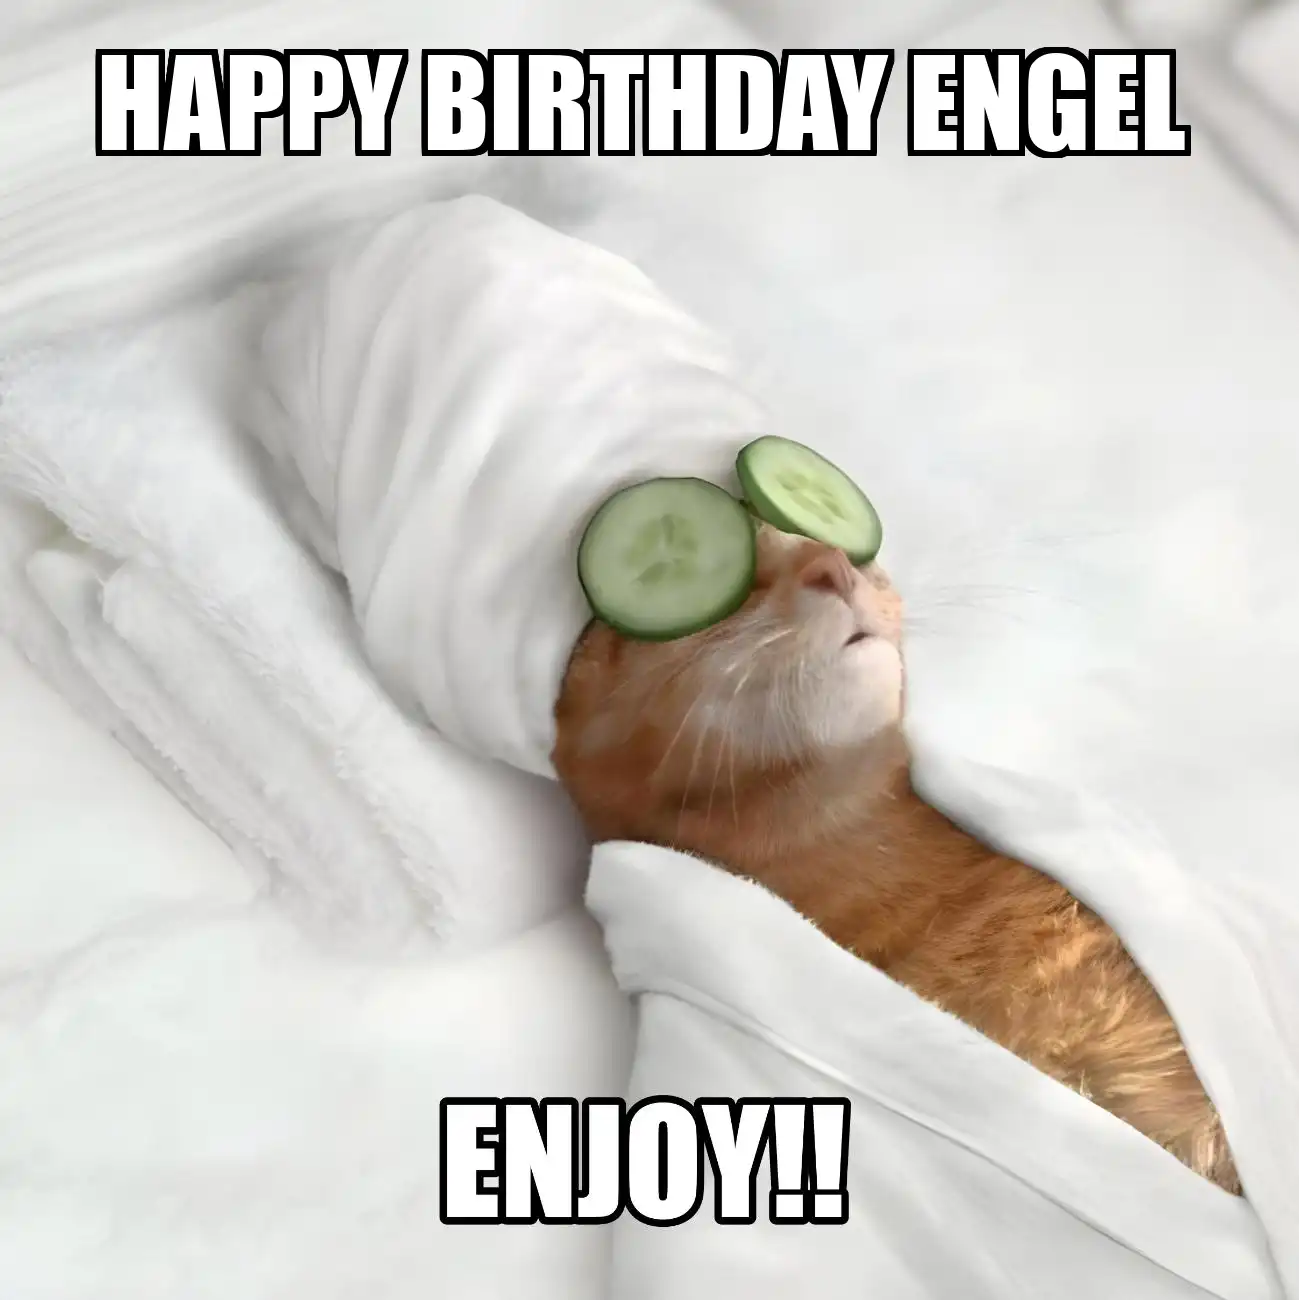 Happy Birthday Engel Enjoy Cat Meme